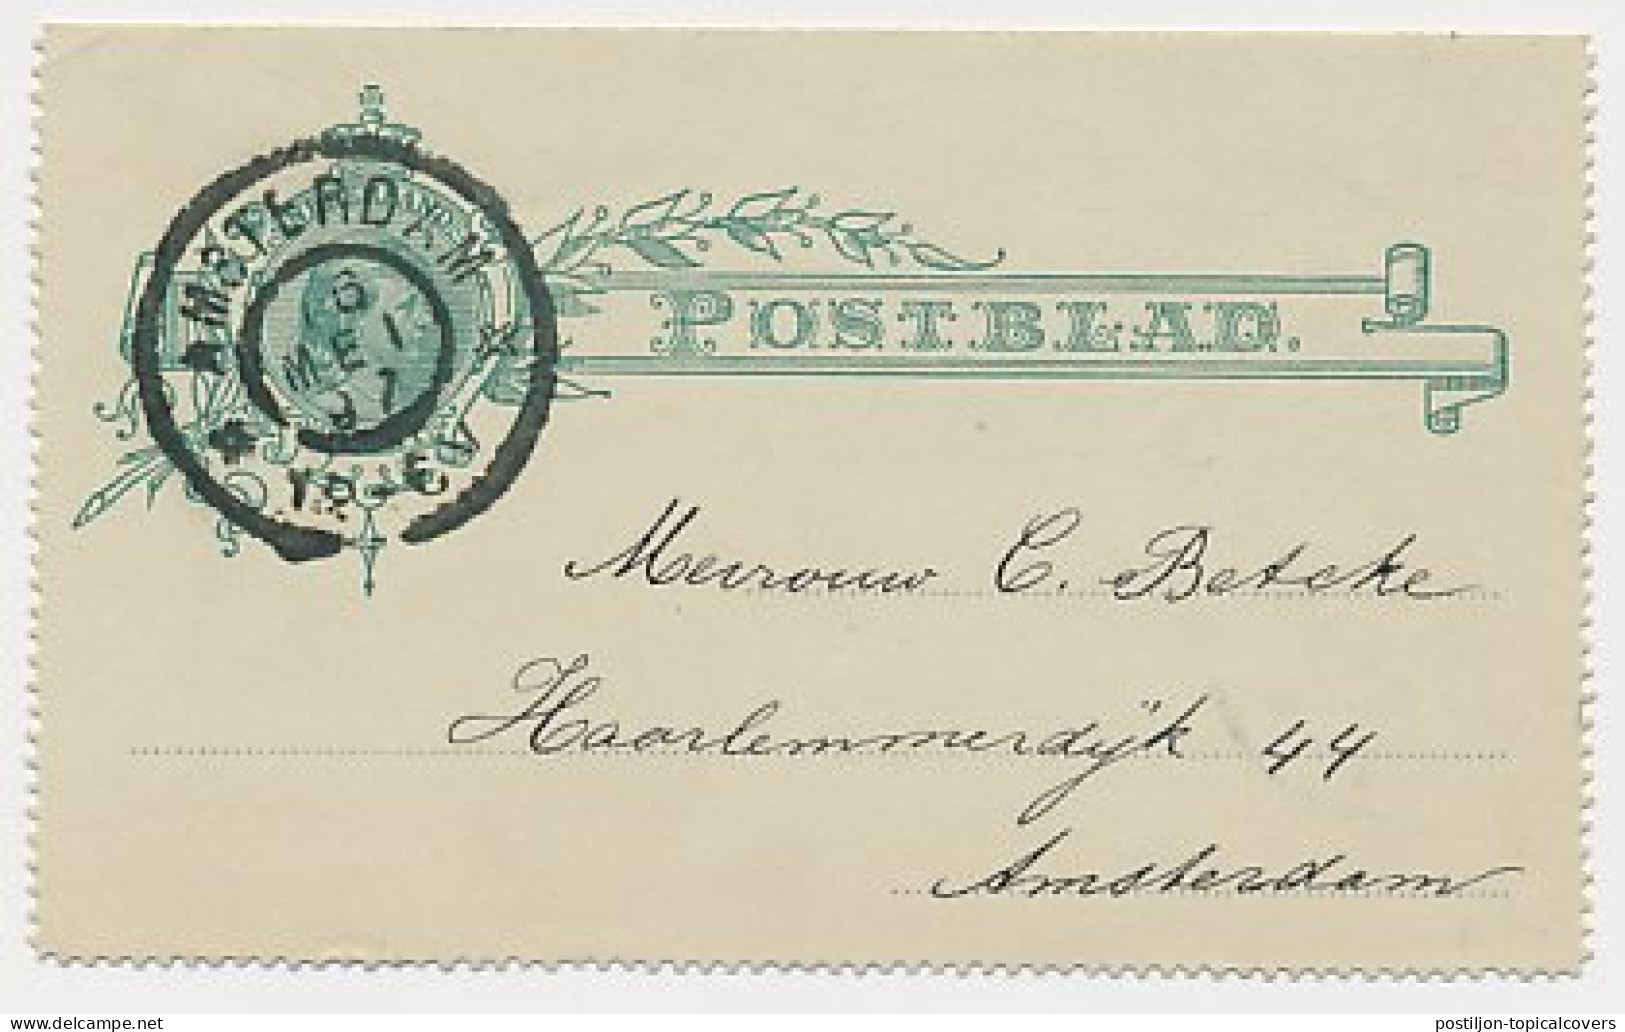 Postblad G. 4 Locaal Te Amsterdam 1897 - Postal Stationery